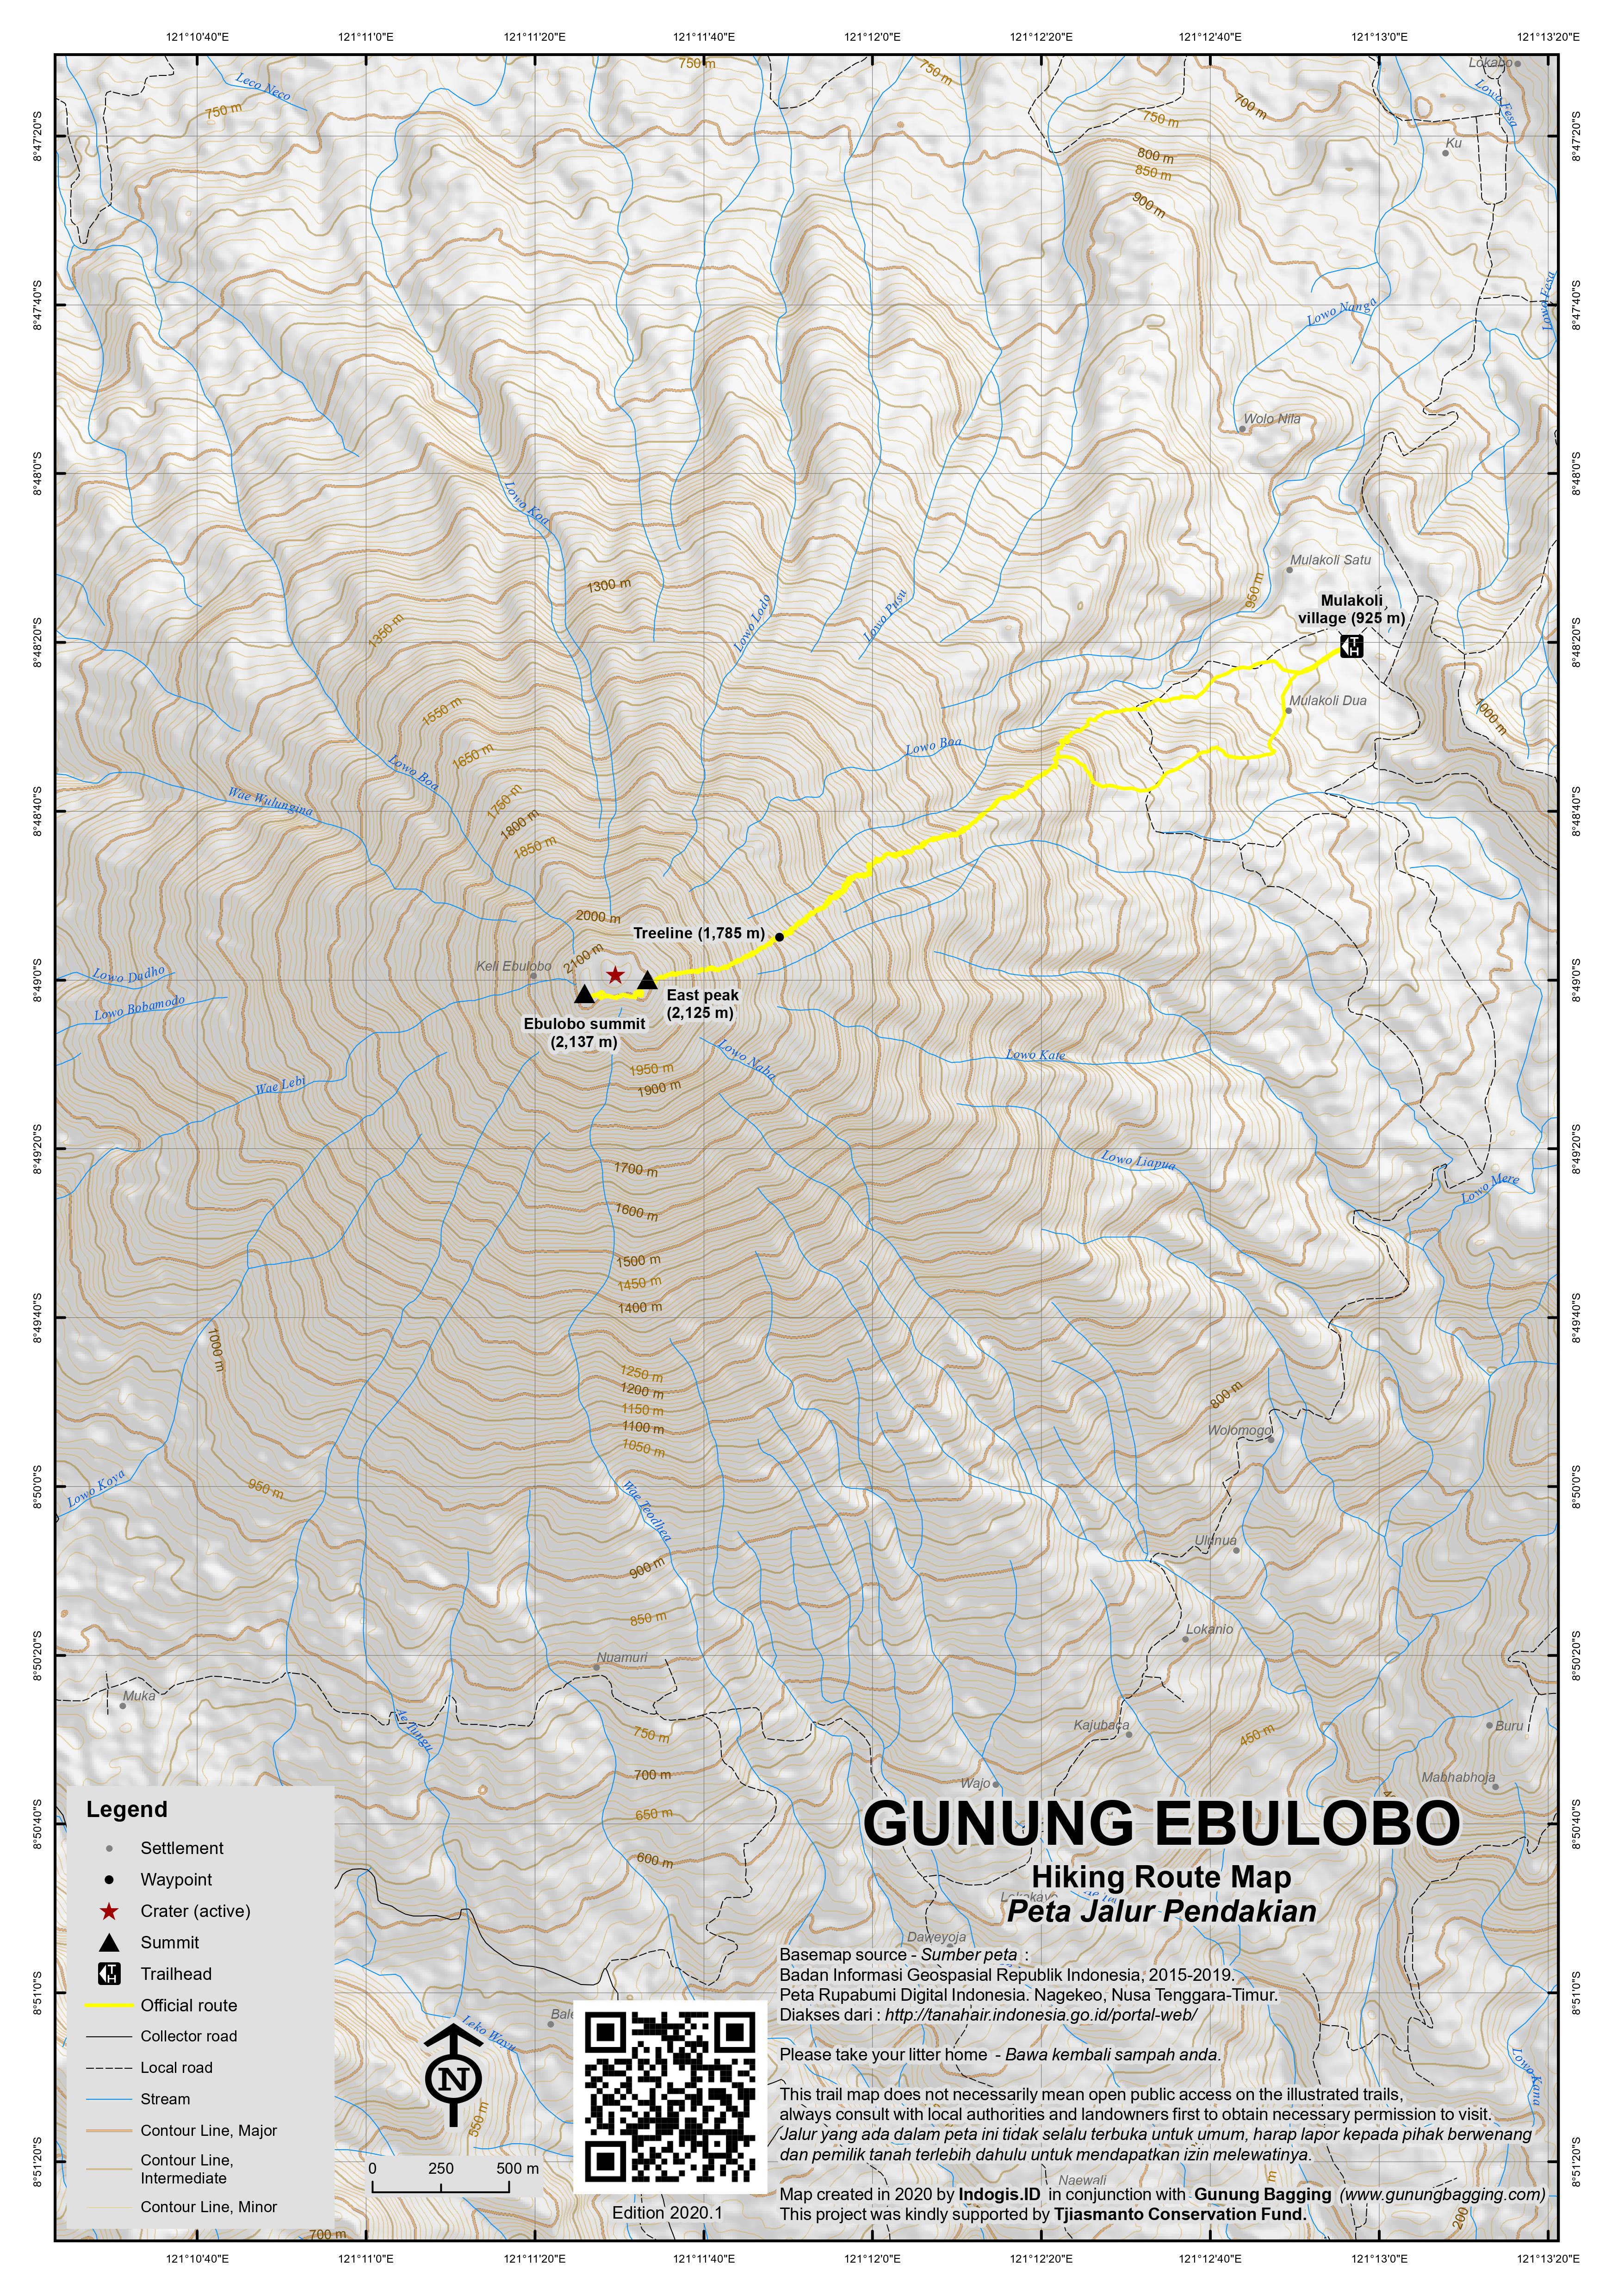 Peta Jalur Pendakian Gunung Ebulobo